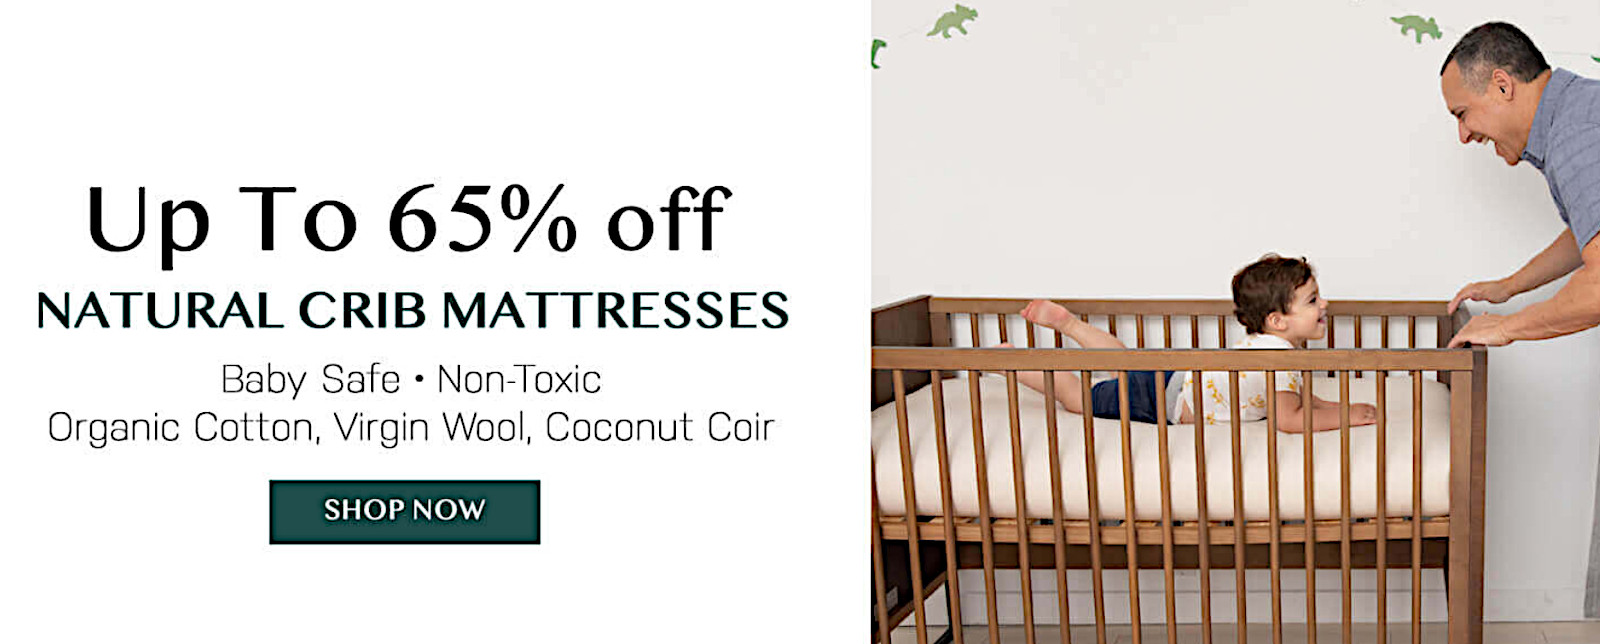 natural crib mattresses uncostly